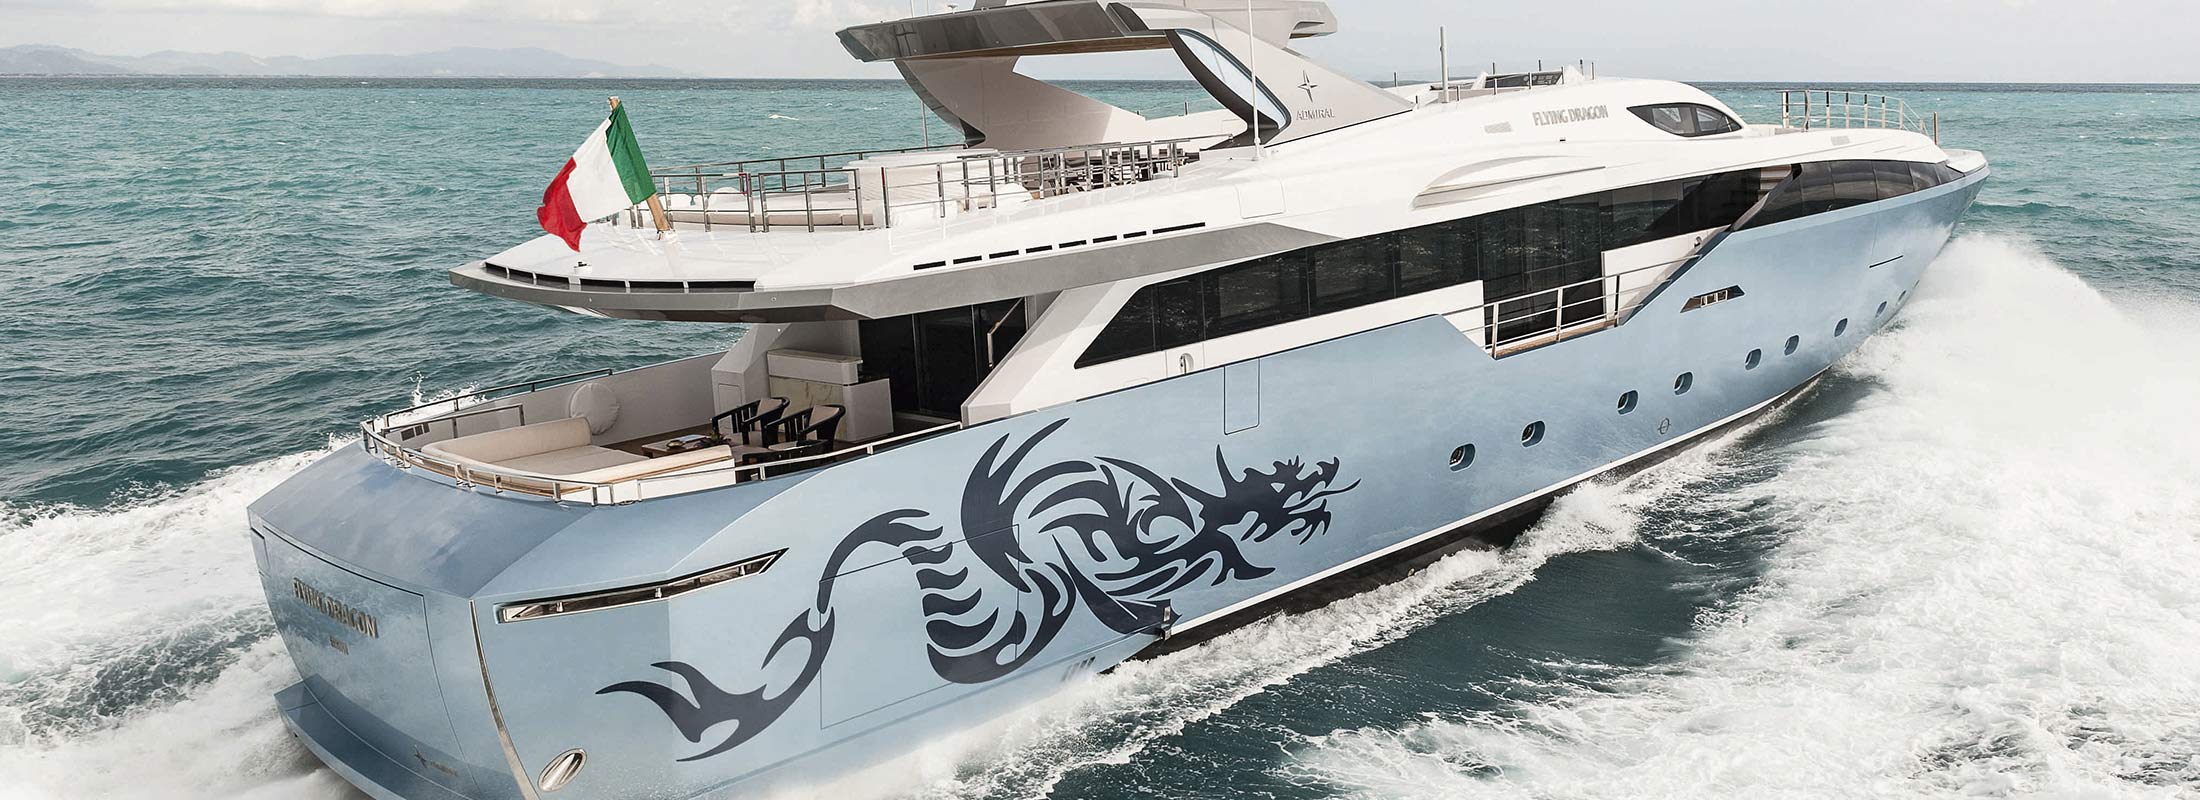 Dragon Motor Yacht for Charter Mediterranean slider 1